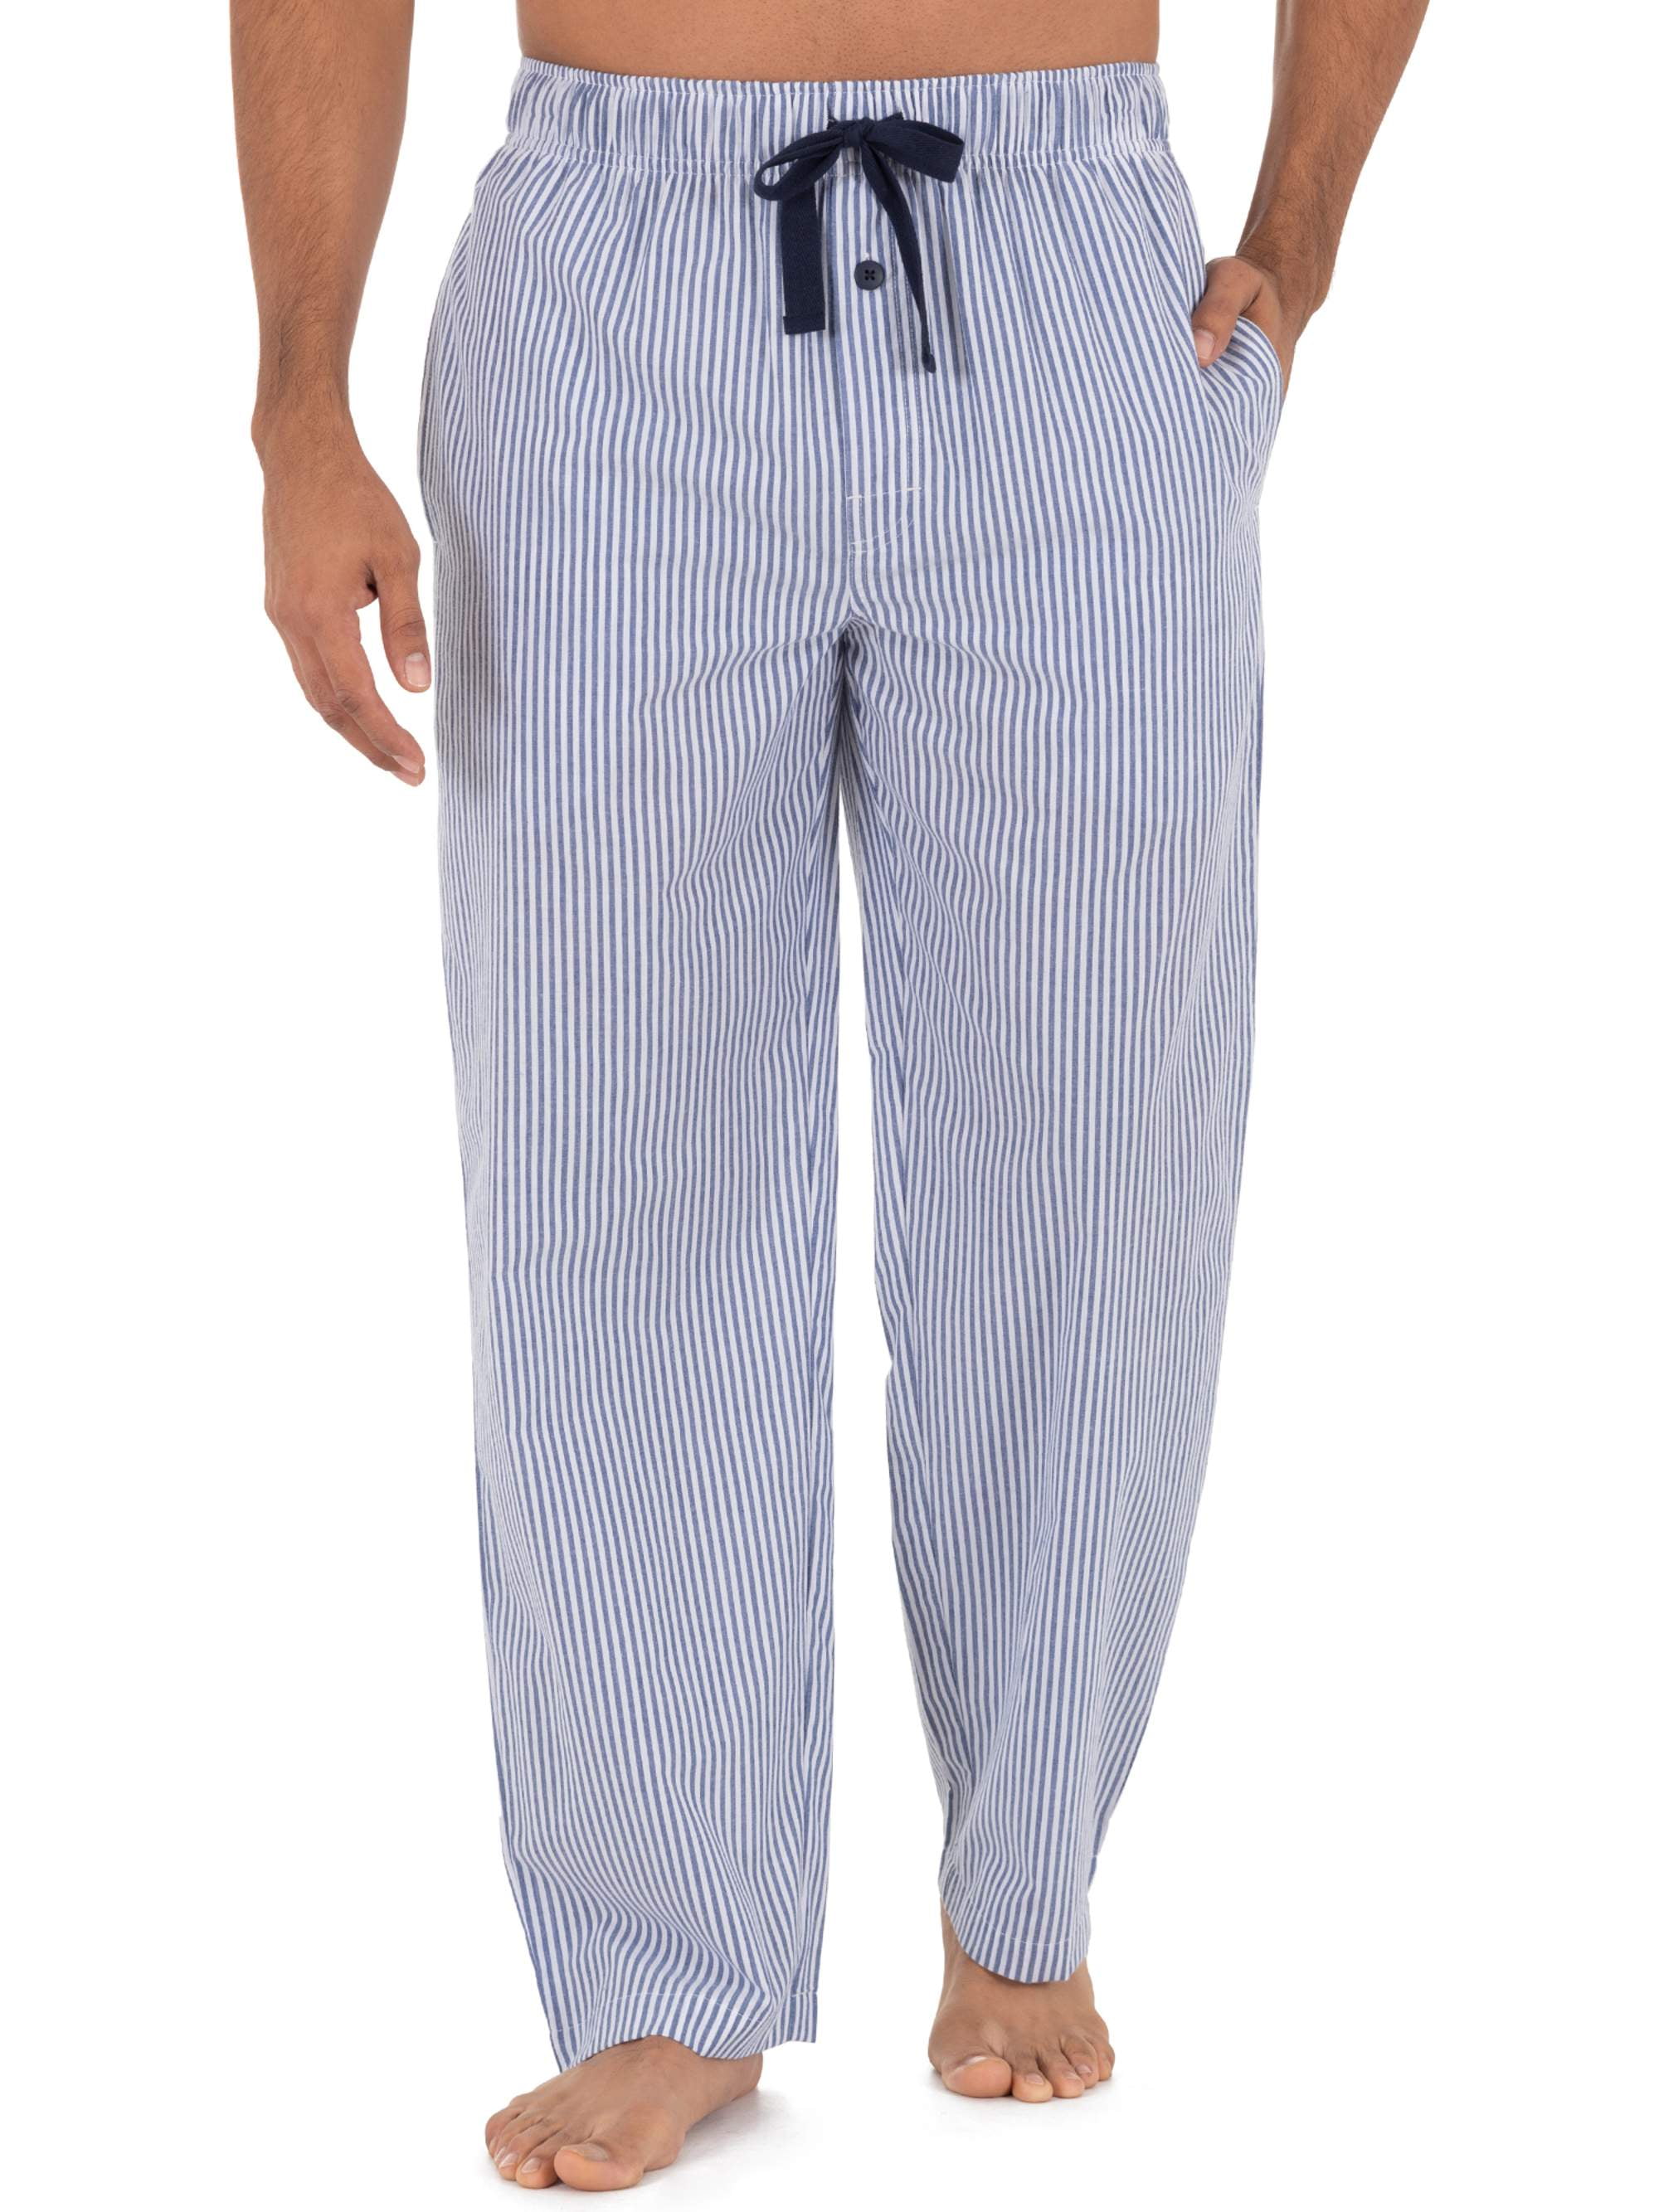 Fruit of the Loom Men's Premium Thermal Union Suit Pajama Bottom